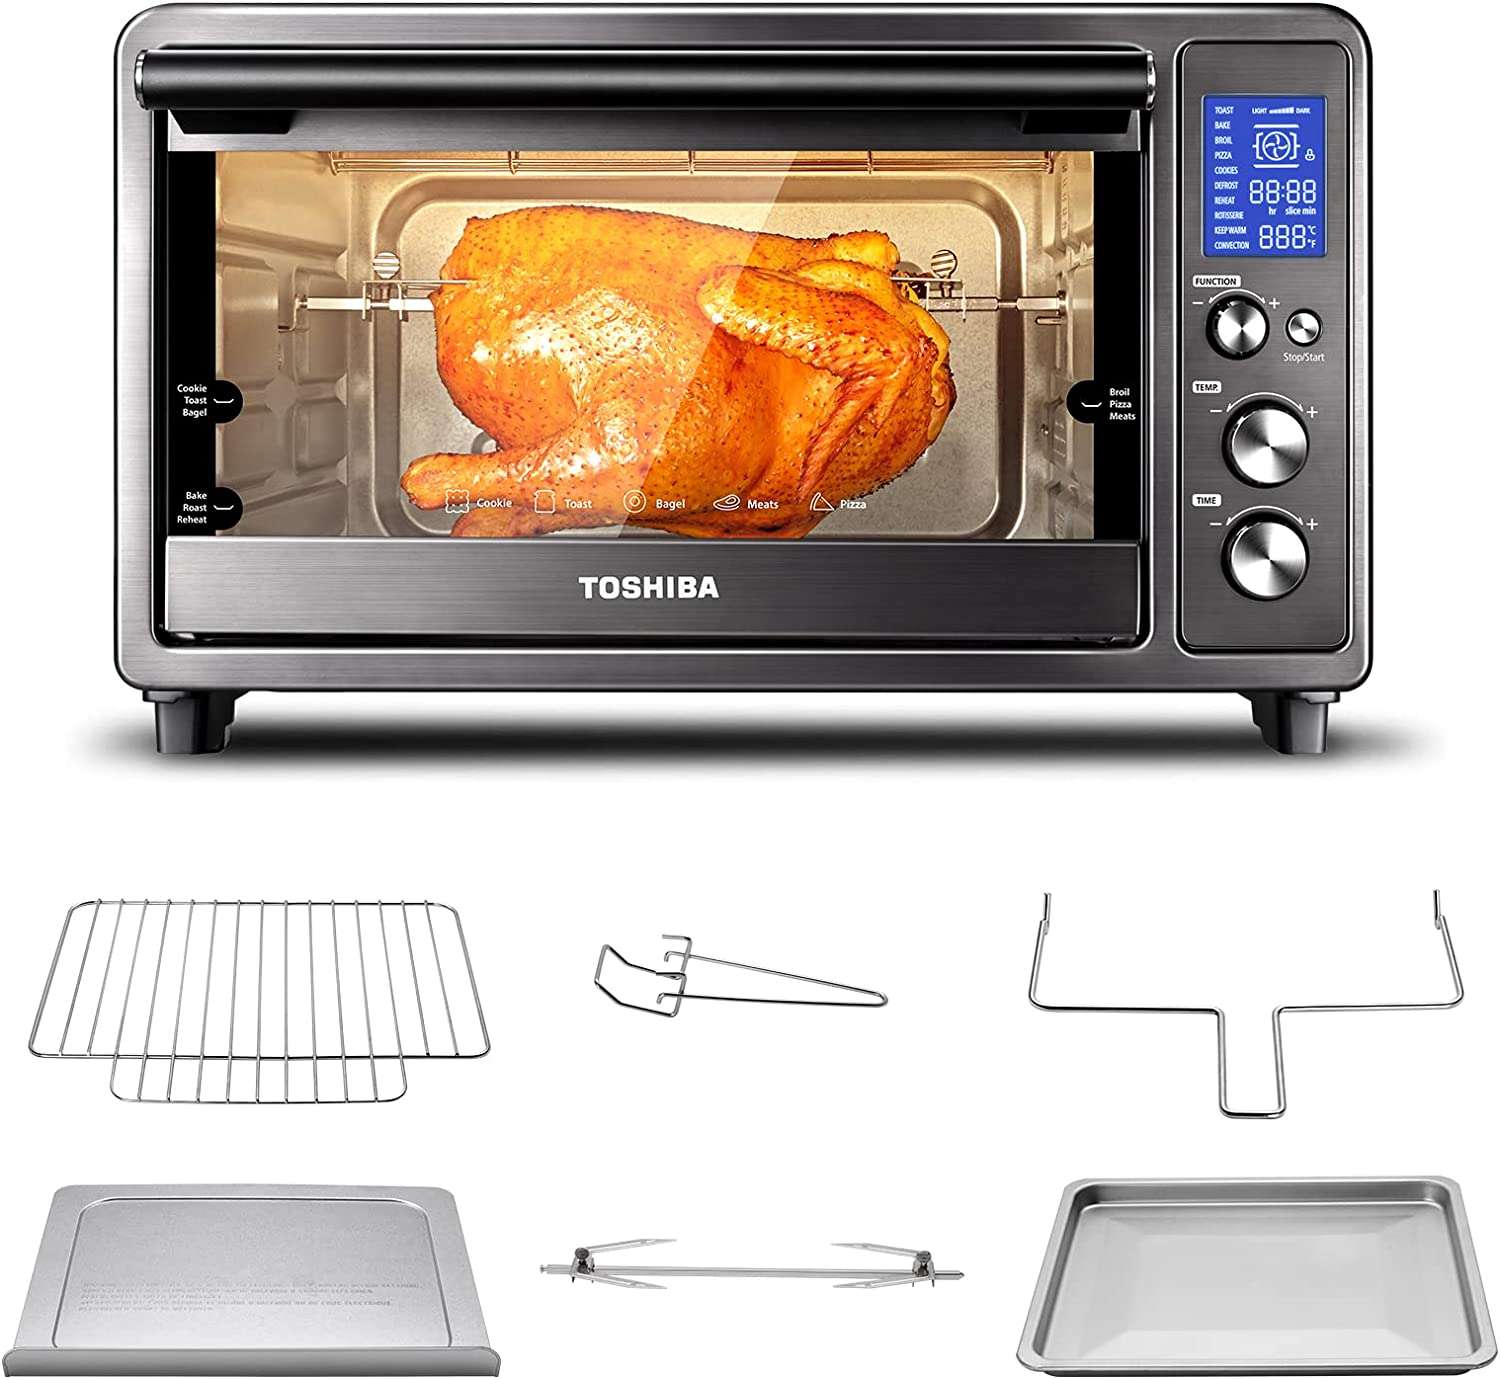 Toshiba Countertop Oven for Baking